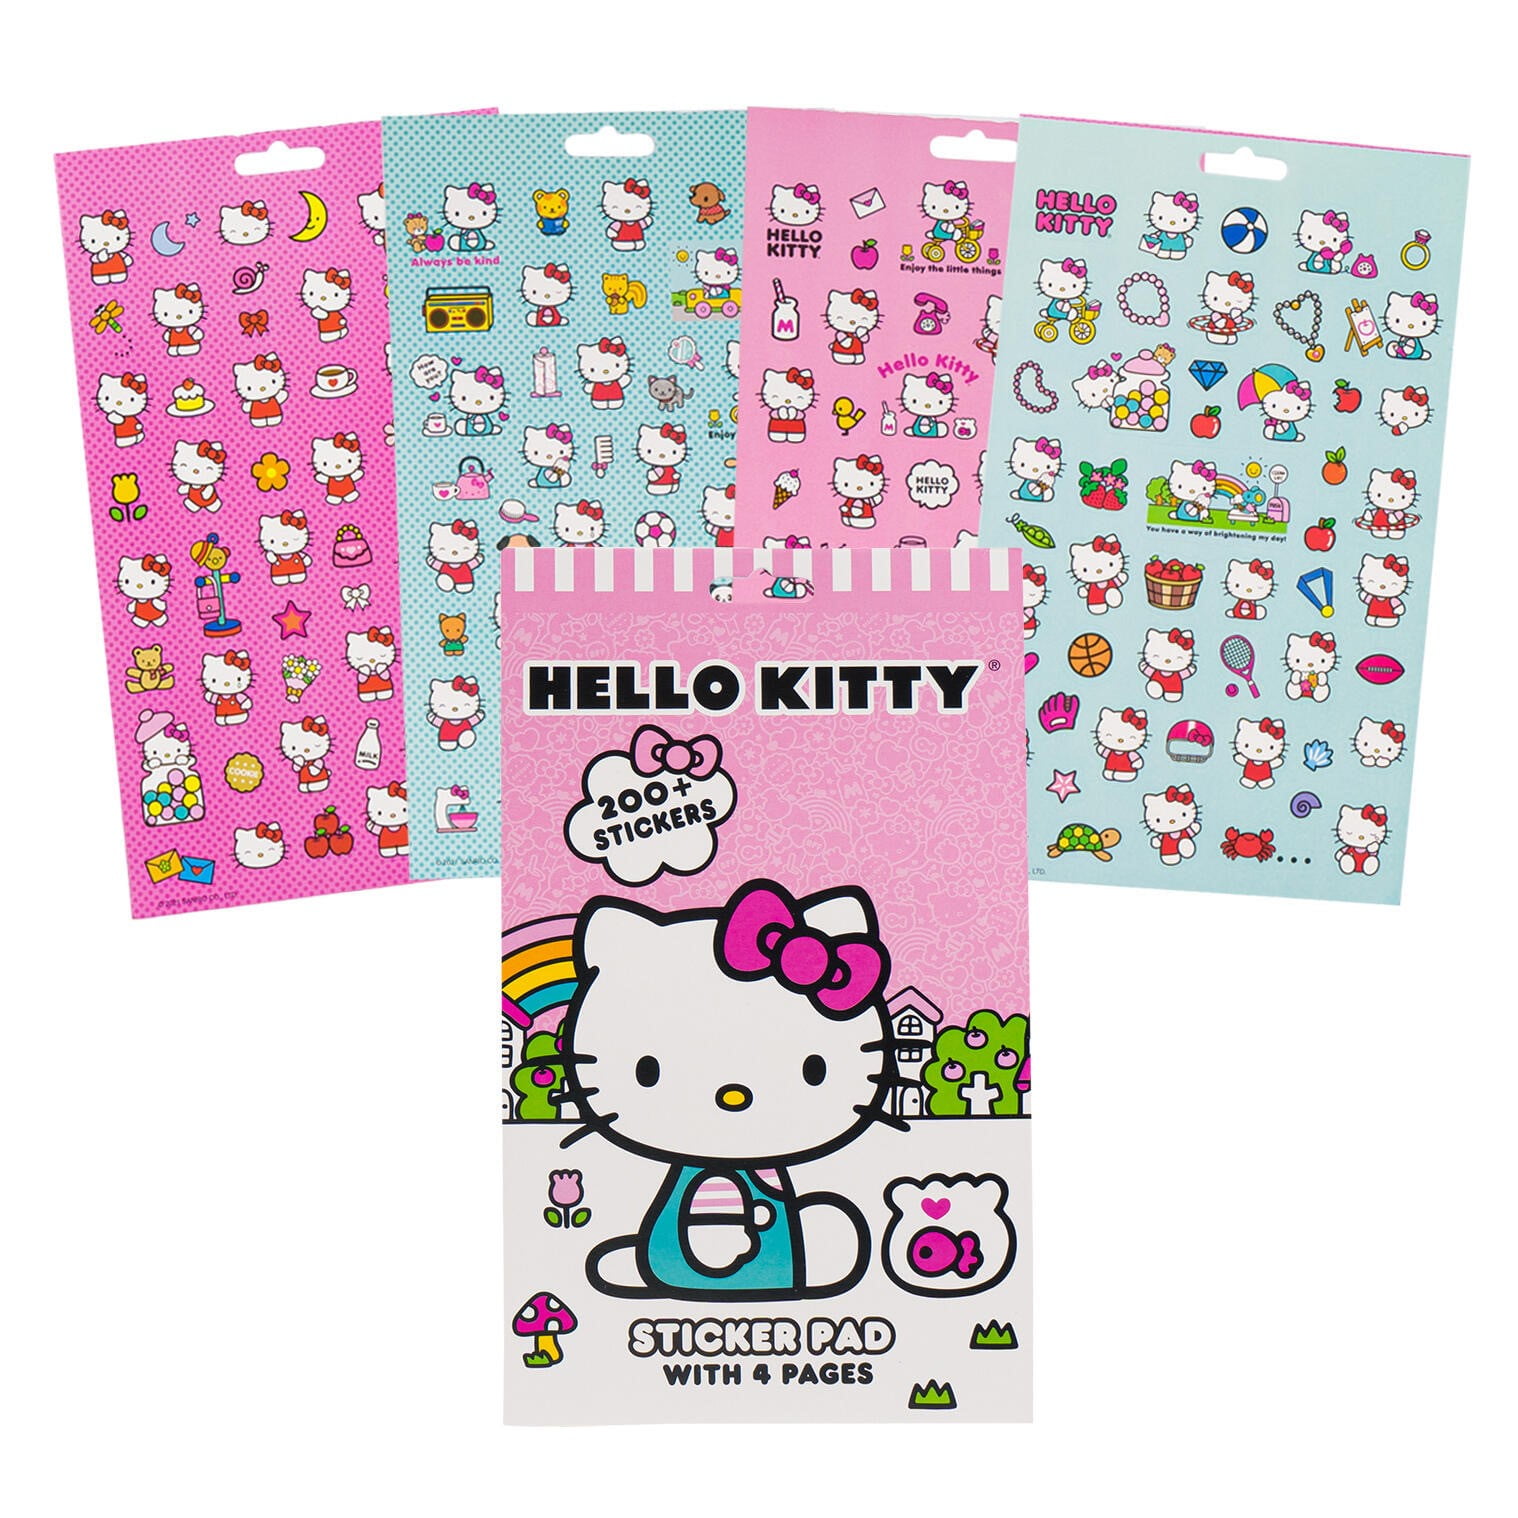 Cute Stickers Set (100 Sheets 600+ Small Pieces) - Kawaii PET Transparent  Cartoon Character Animal Decorative Scrapbooking Sticker Decal Pack for